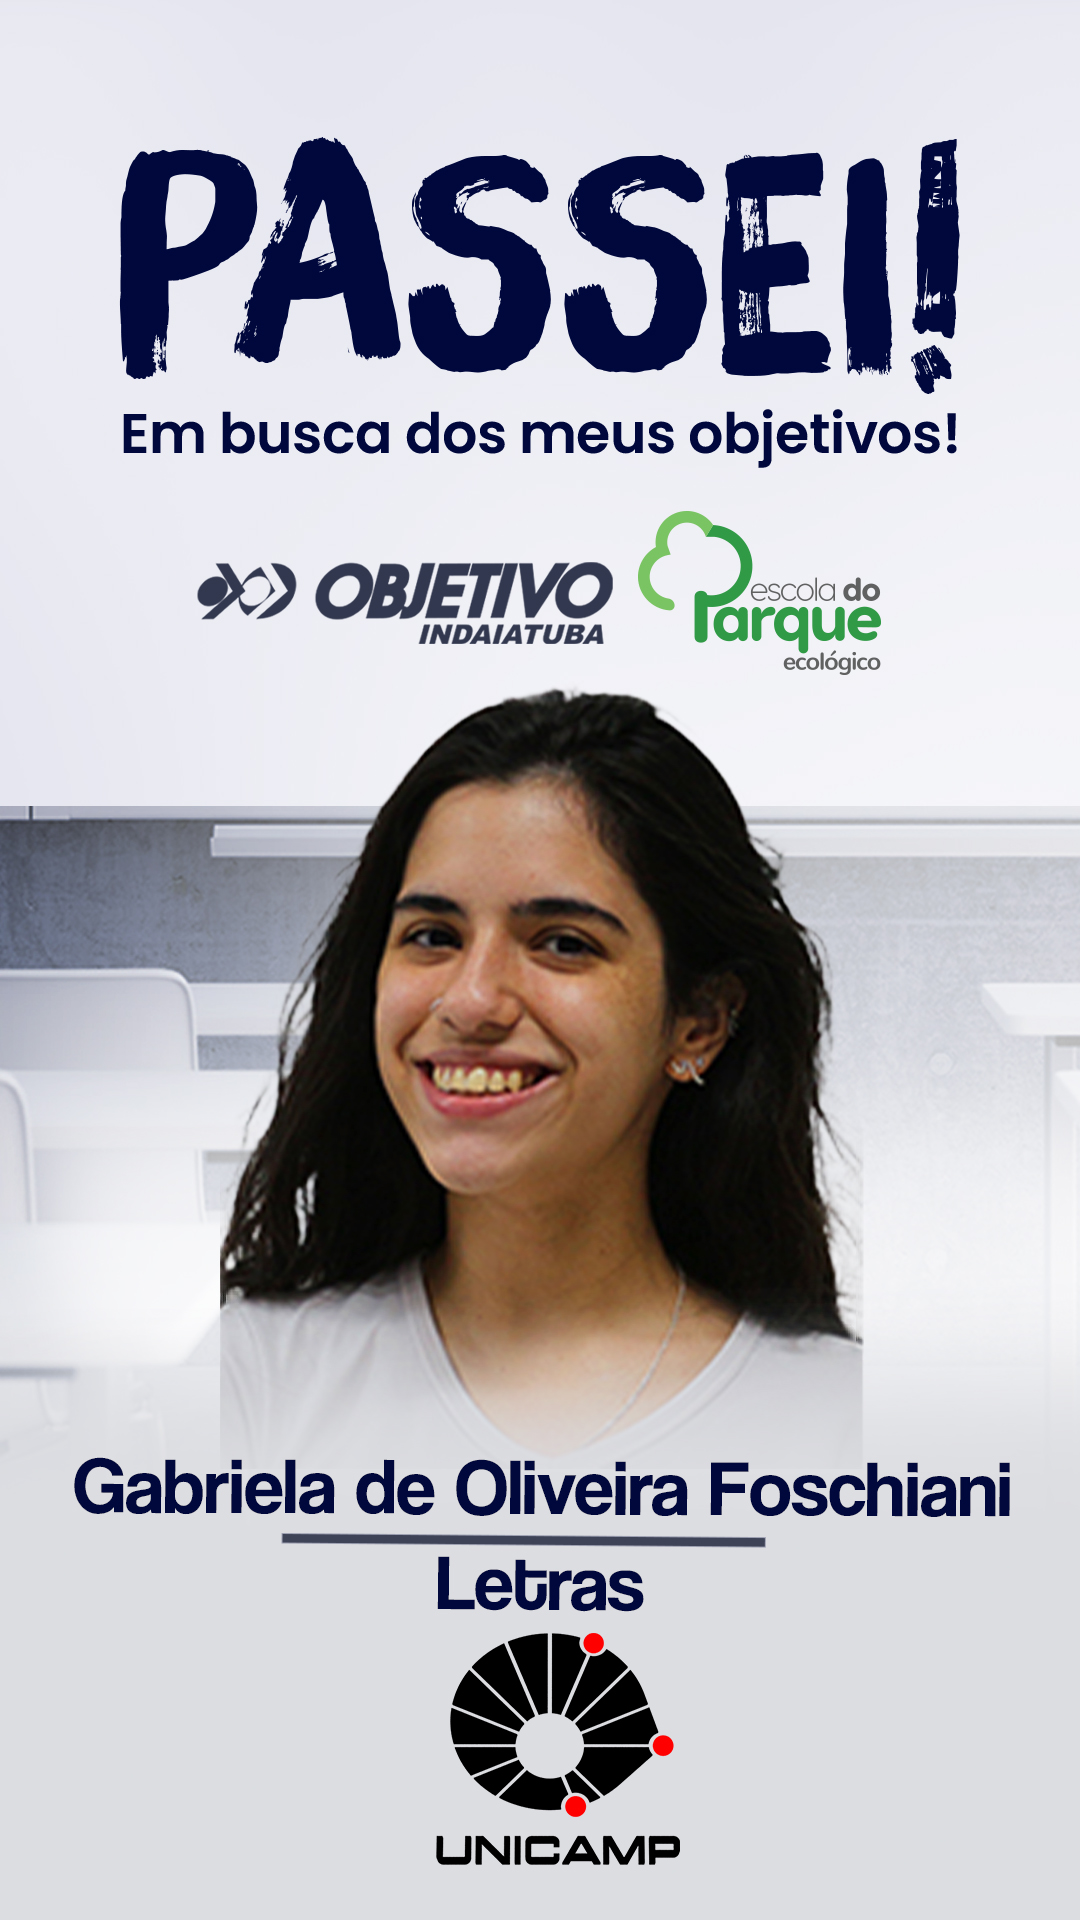 Gabriela de Oliveira Foschiani